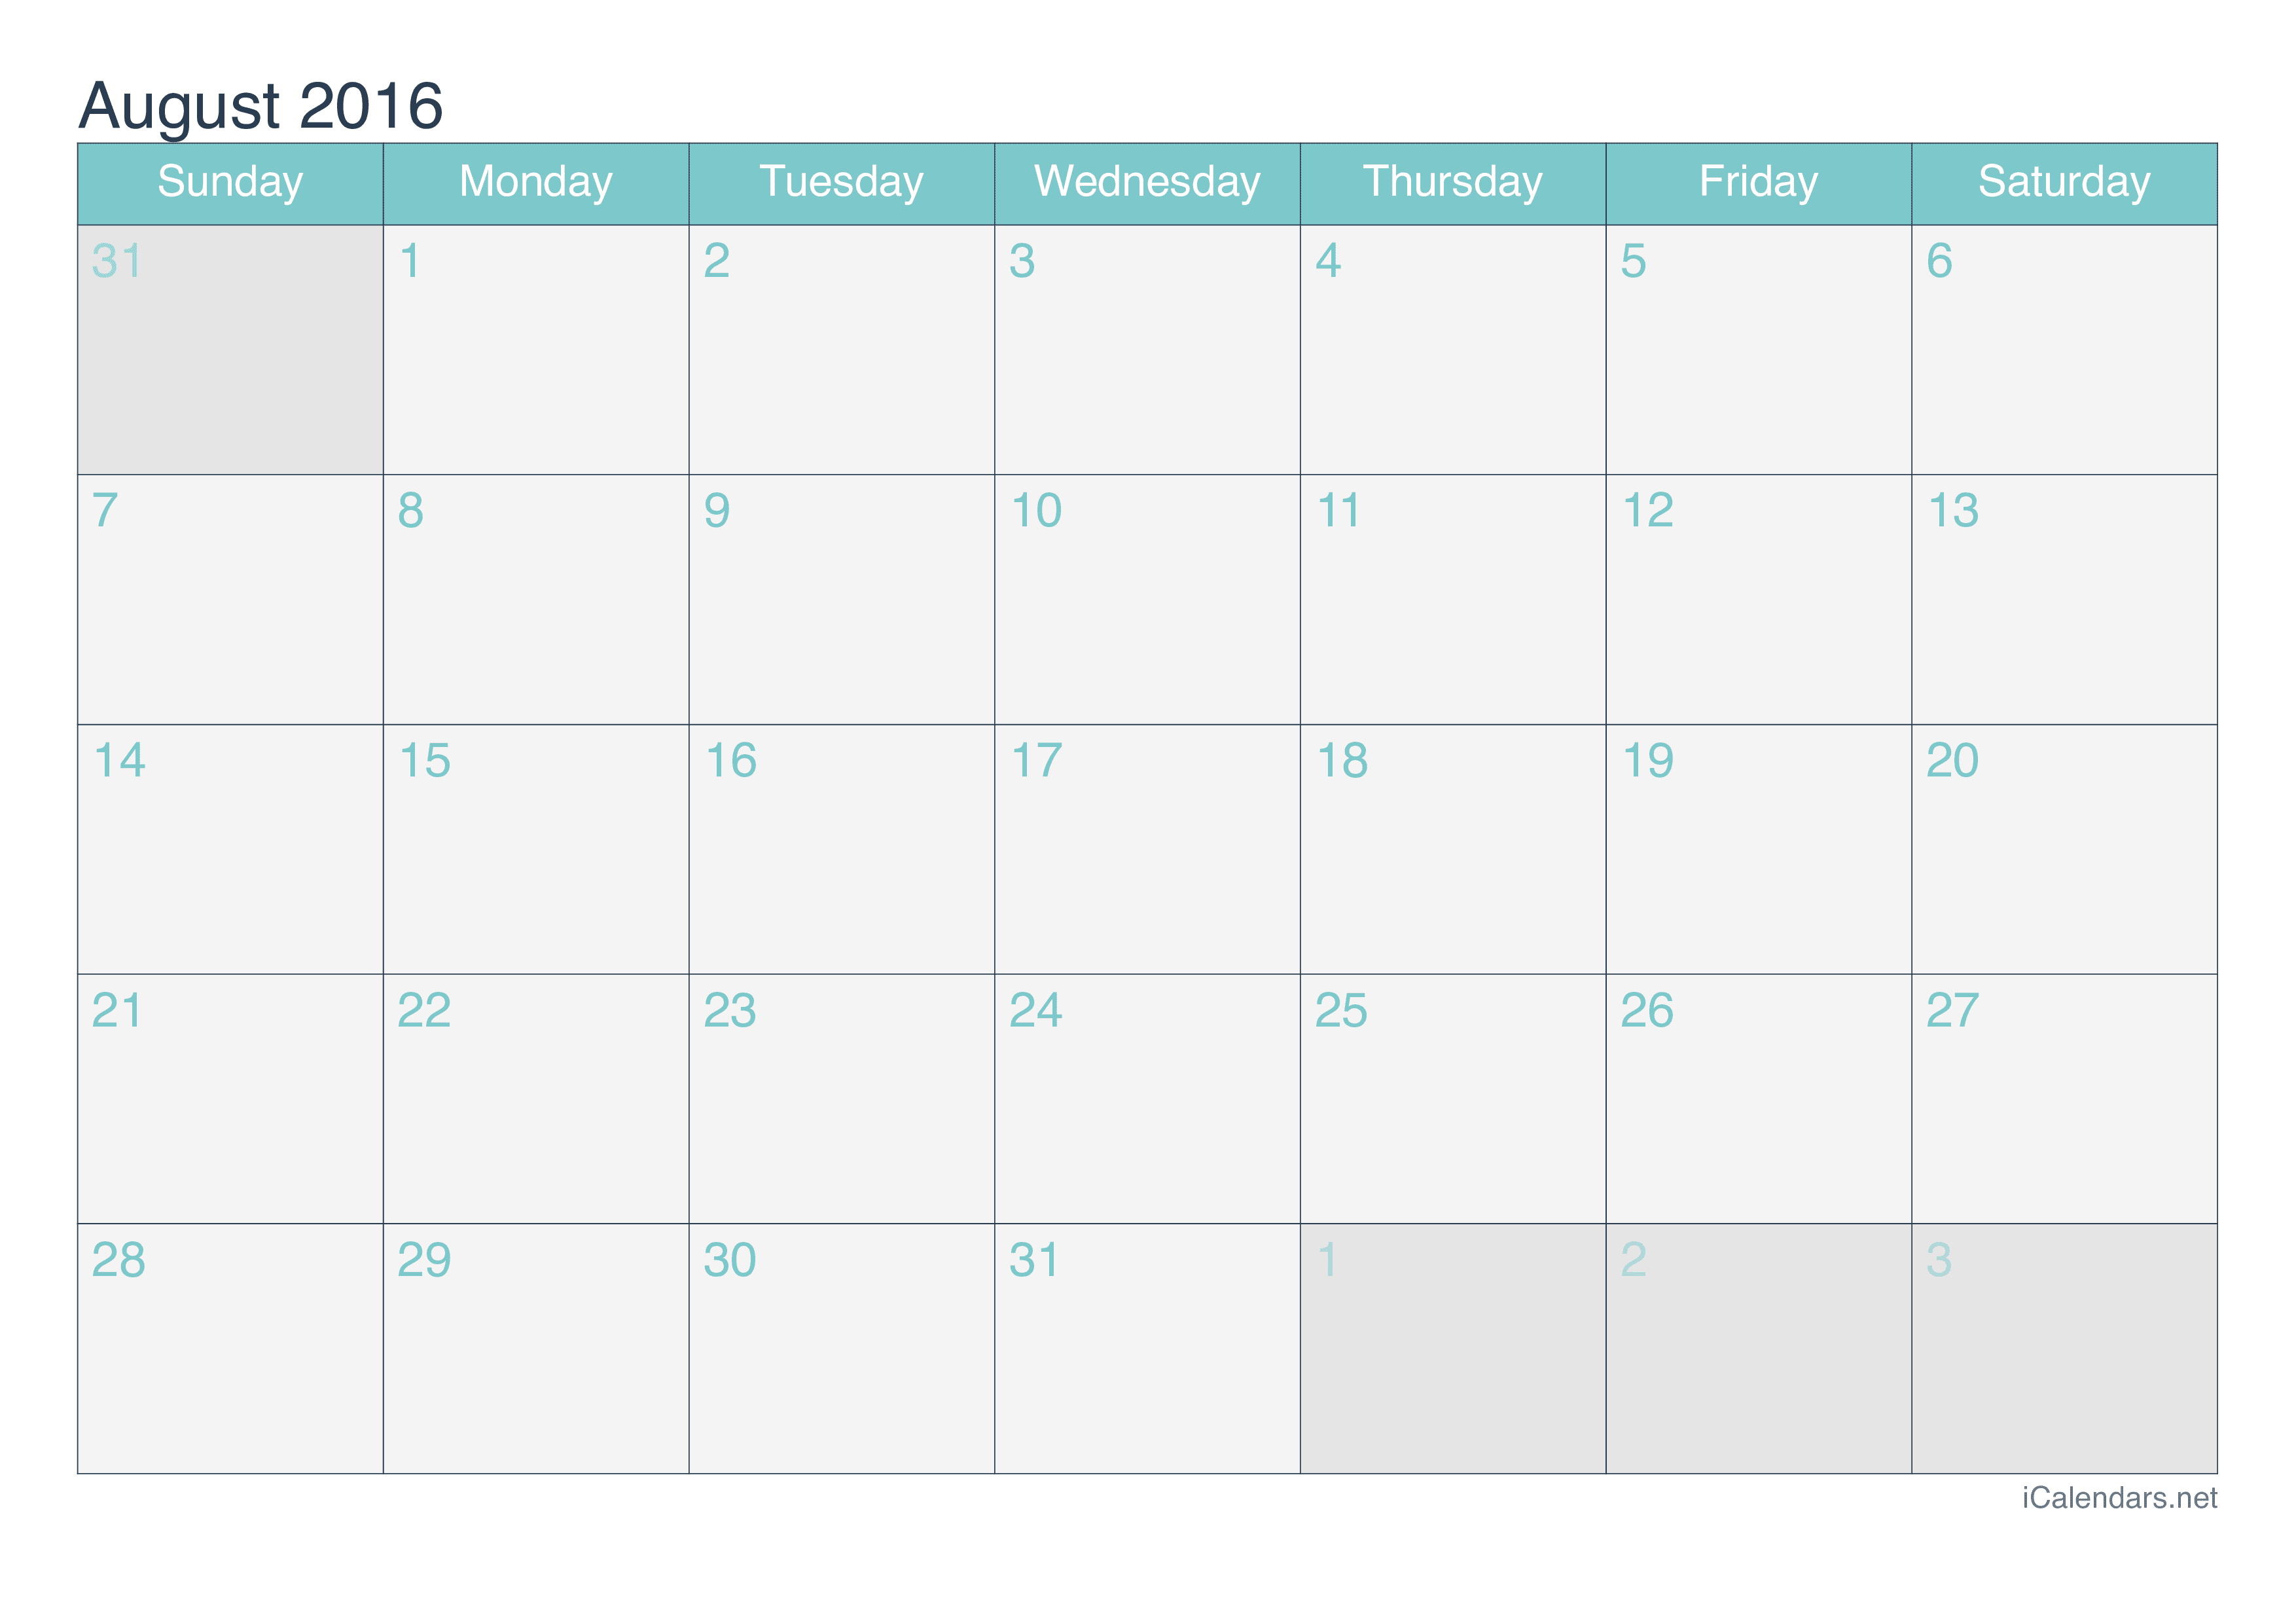 August 2016 Printable Calendar